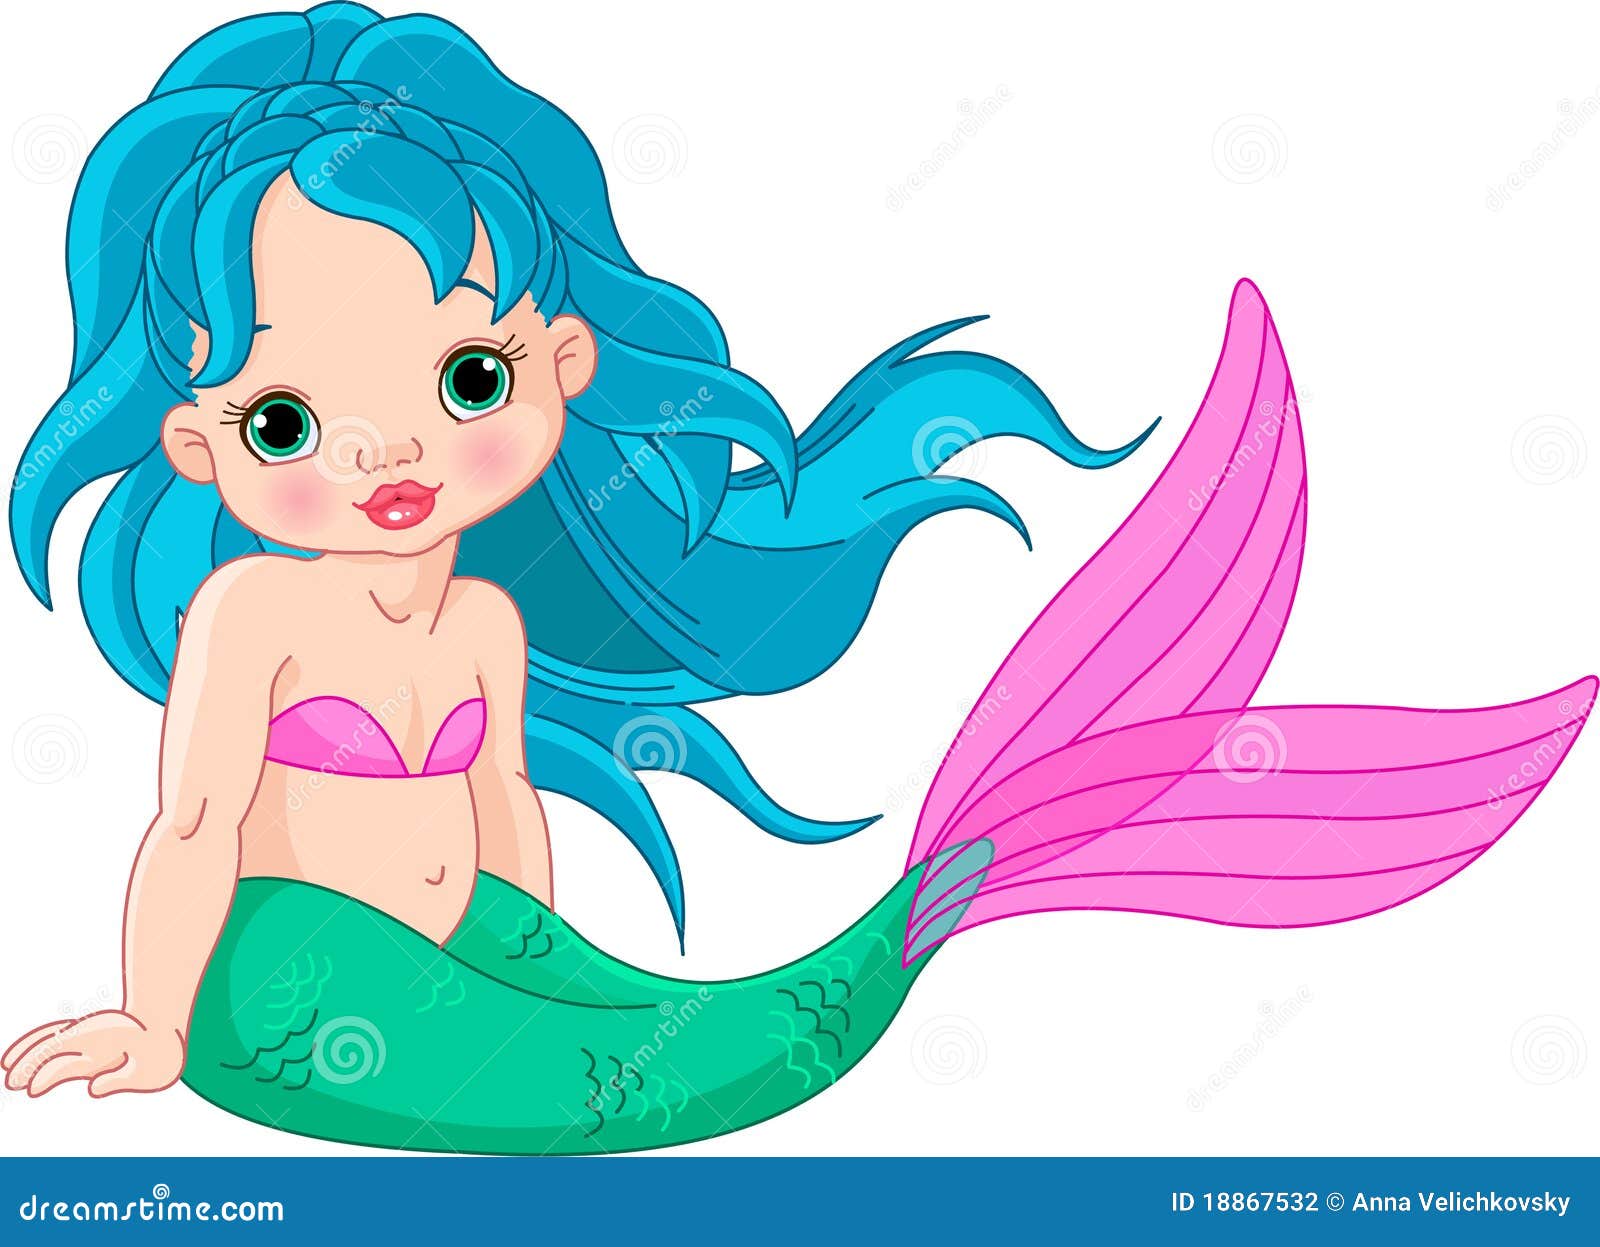 baby mermaid clipart - photo #17